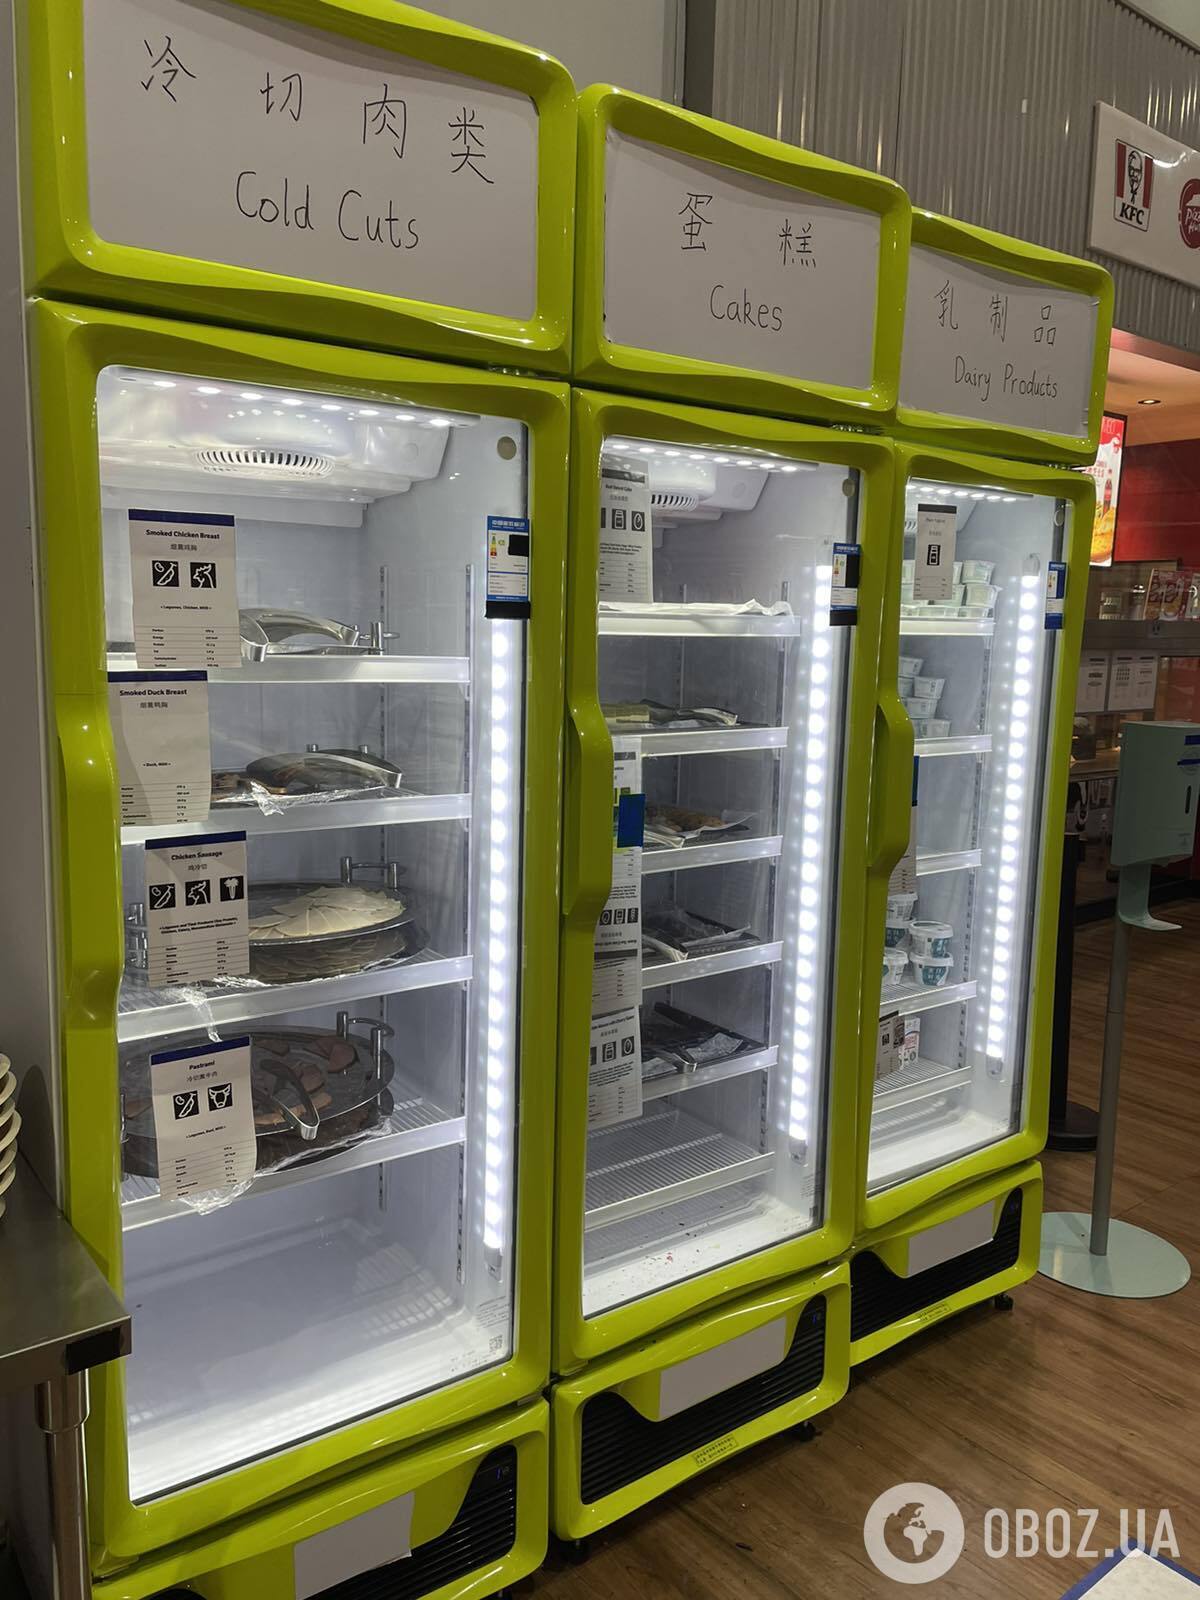 Холодильник с десертами и йогуртами на Олимпиаде.